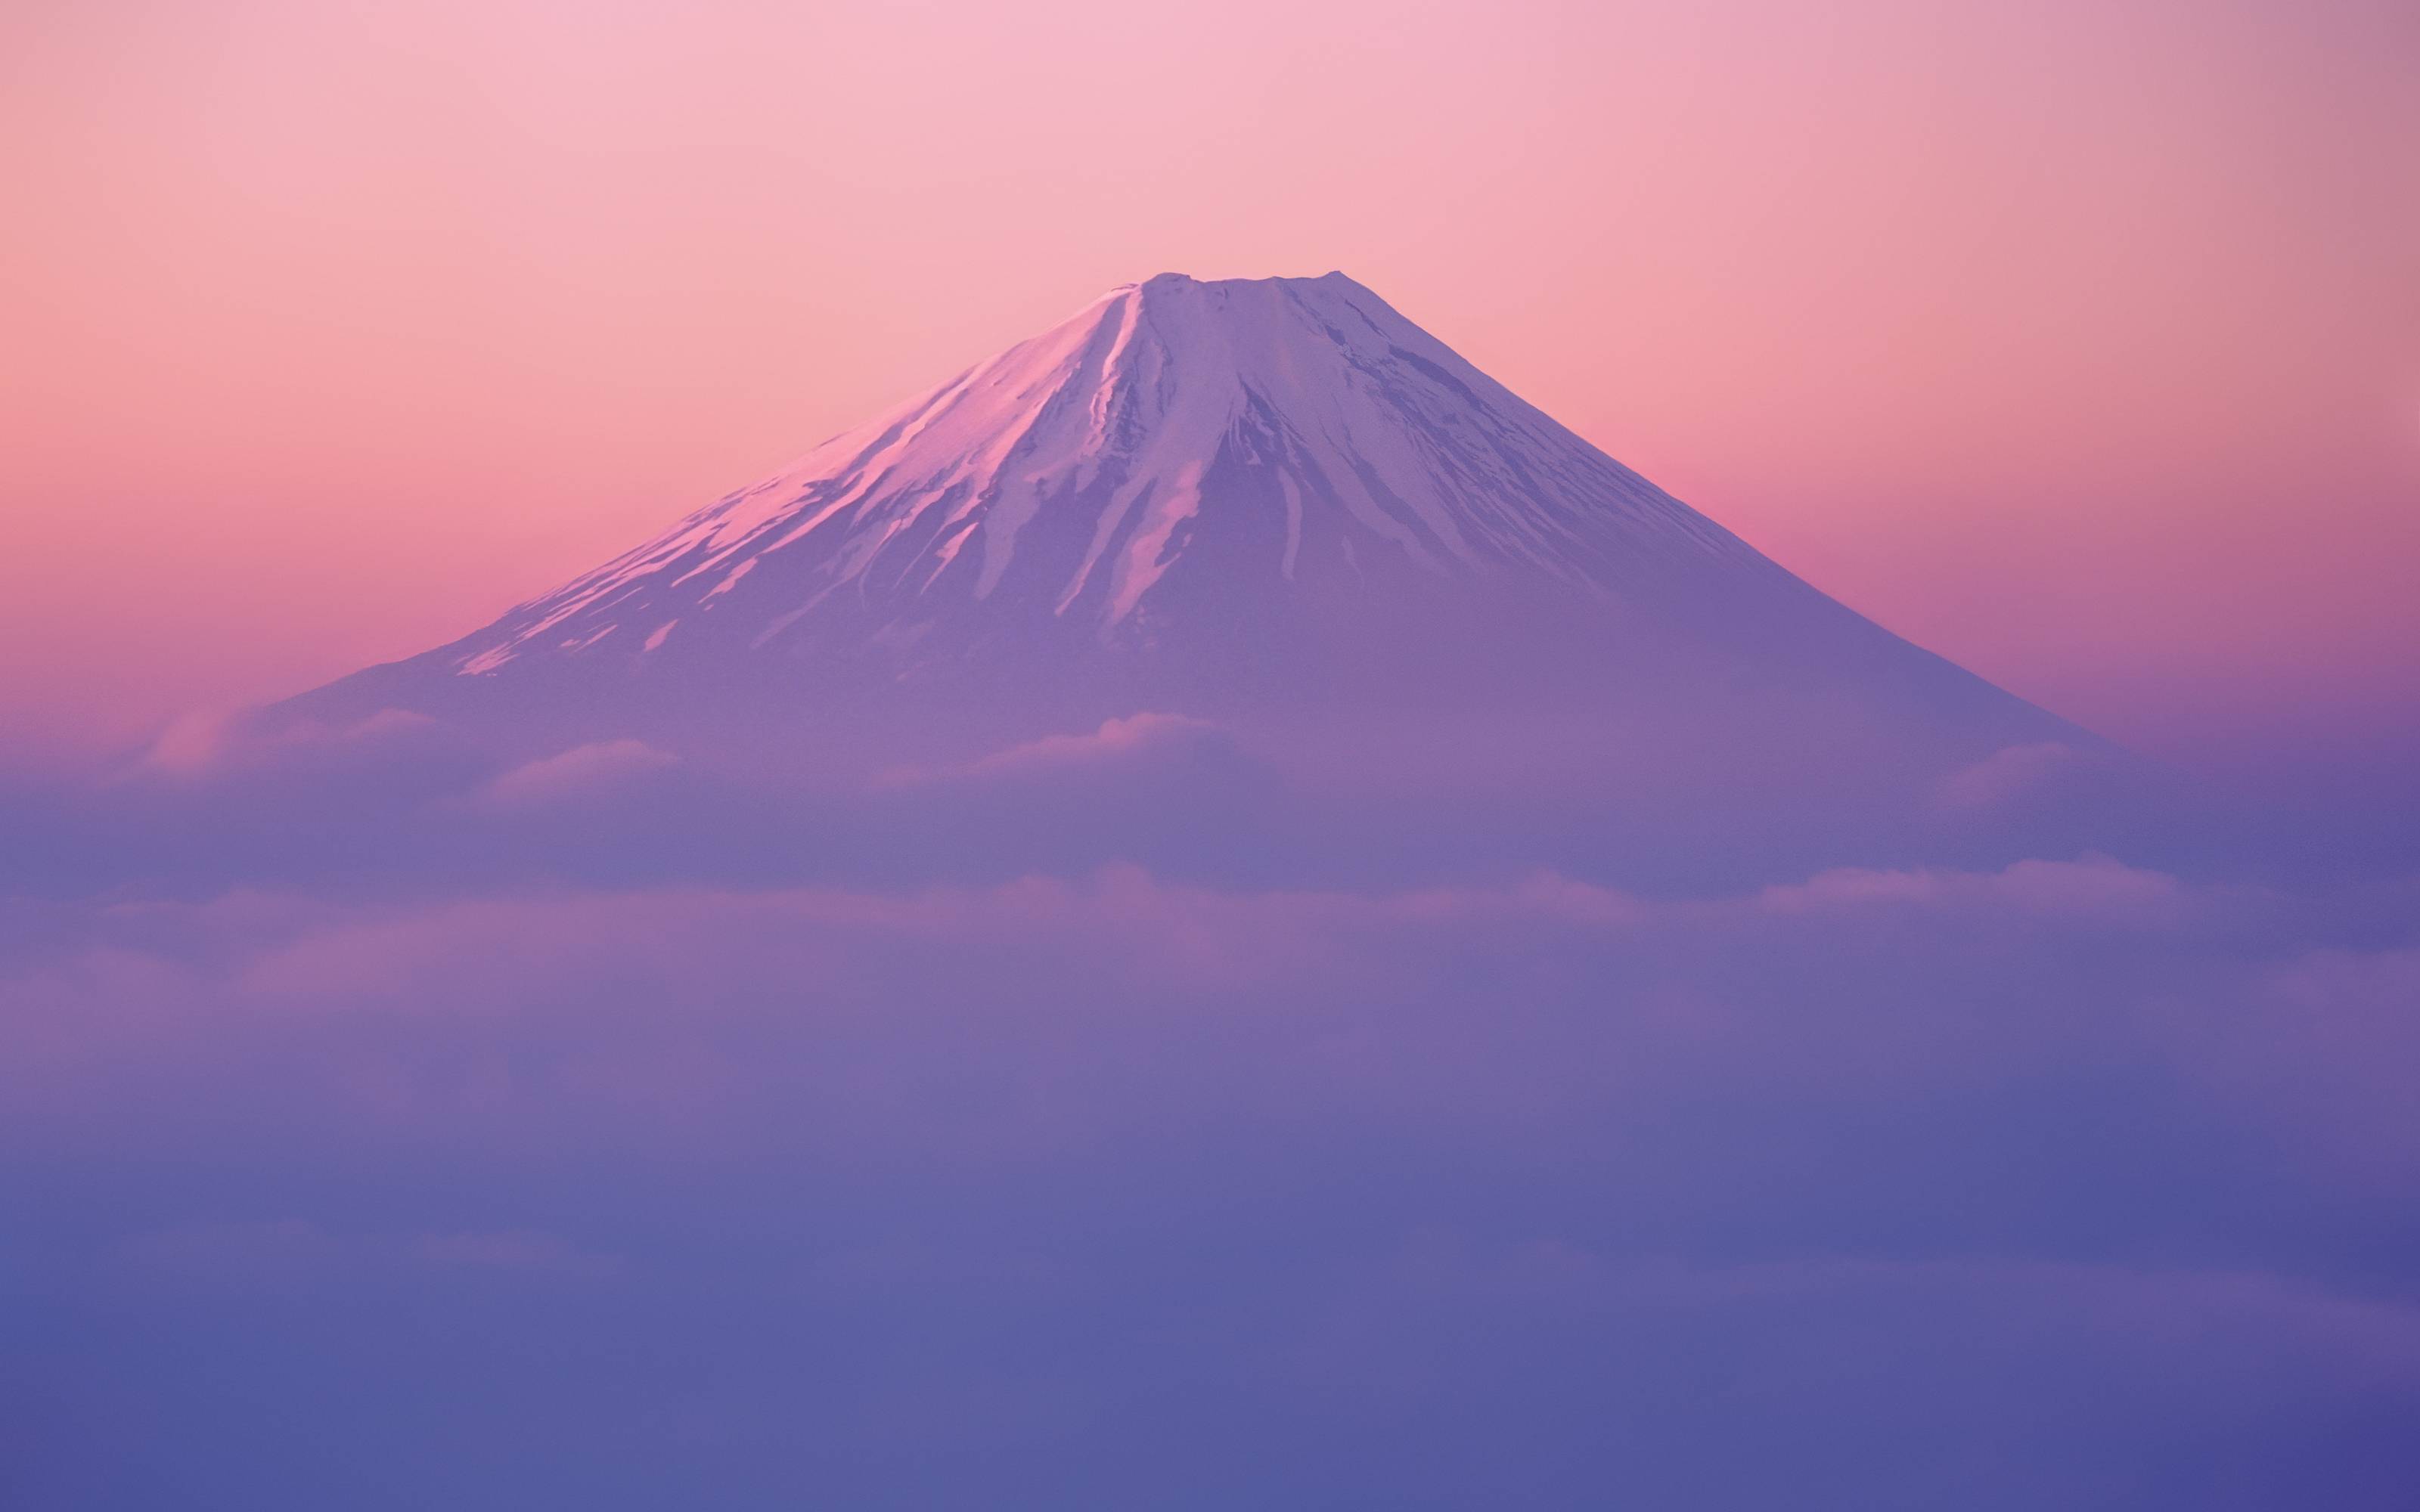 New Mt Fuji Wallpaper In Mac Os X Lion Developer Pre Osxdaily